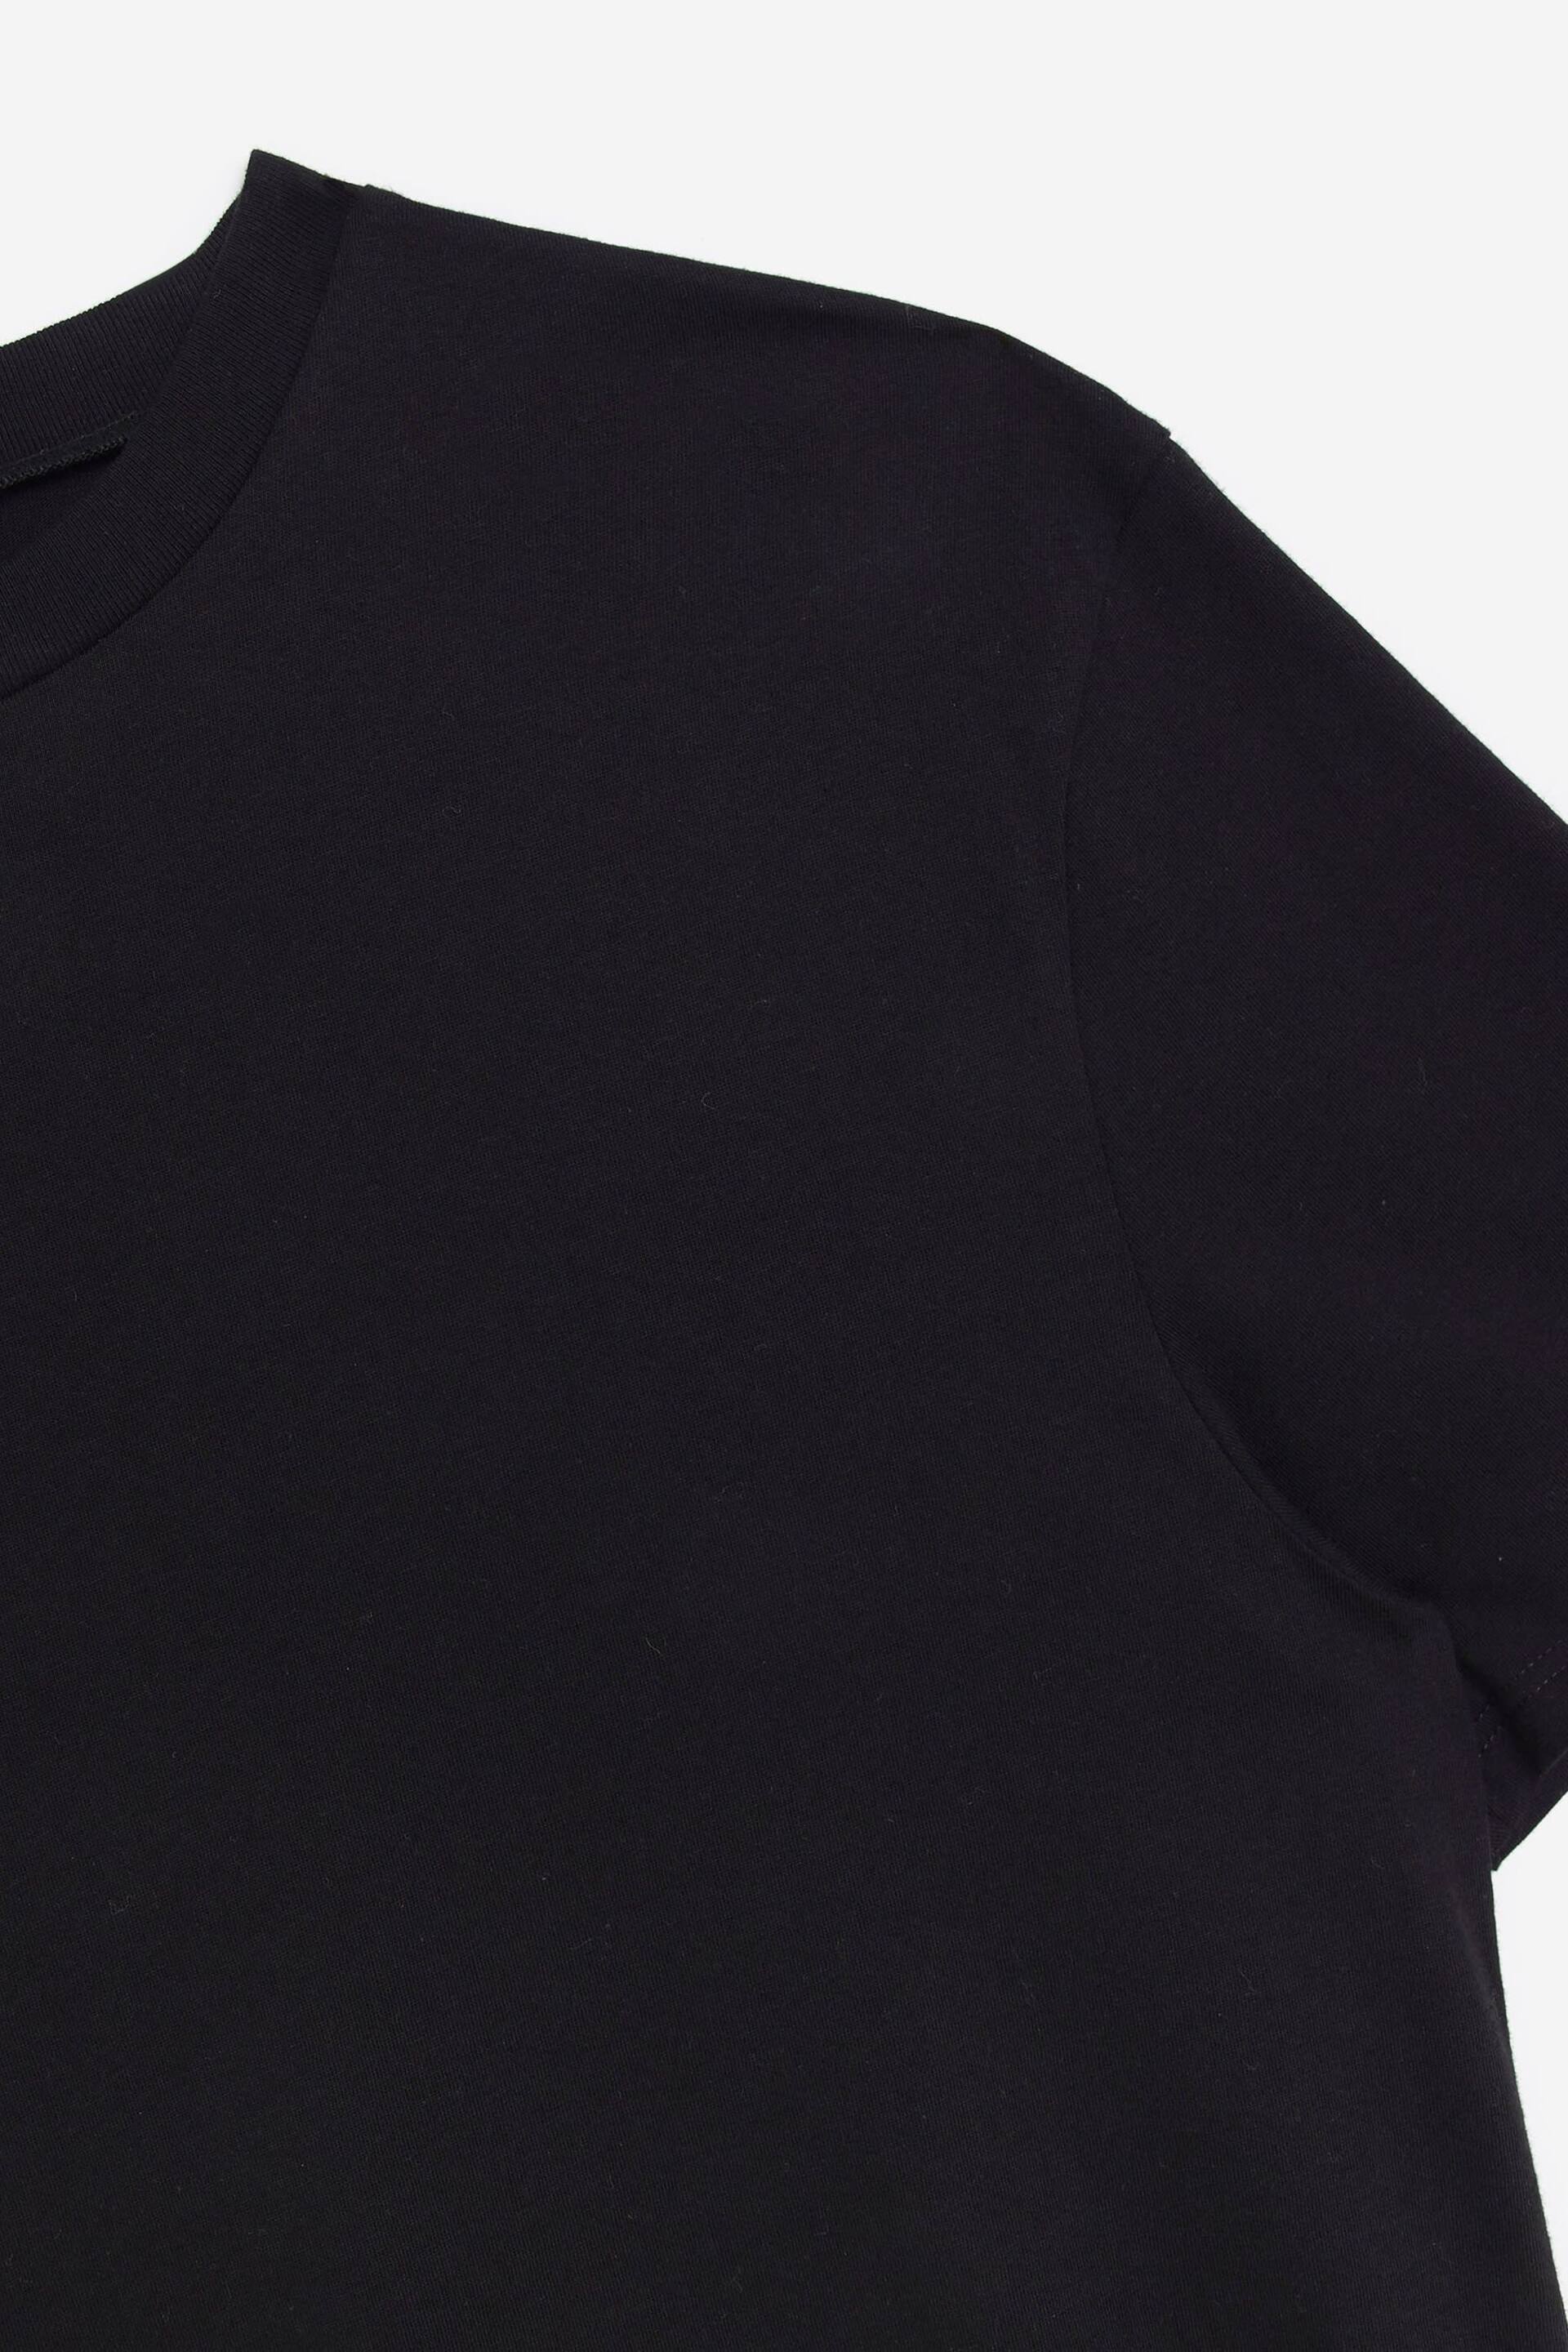 River Island Black Slim Fit T-Shirt - Image 4 of 4